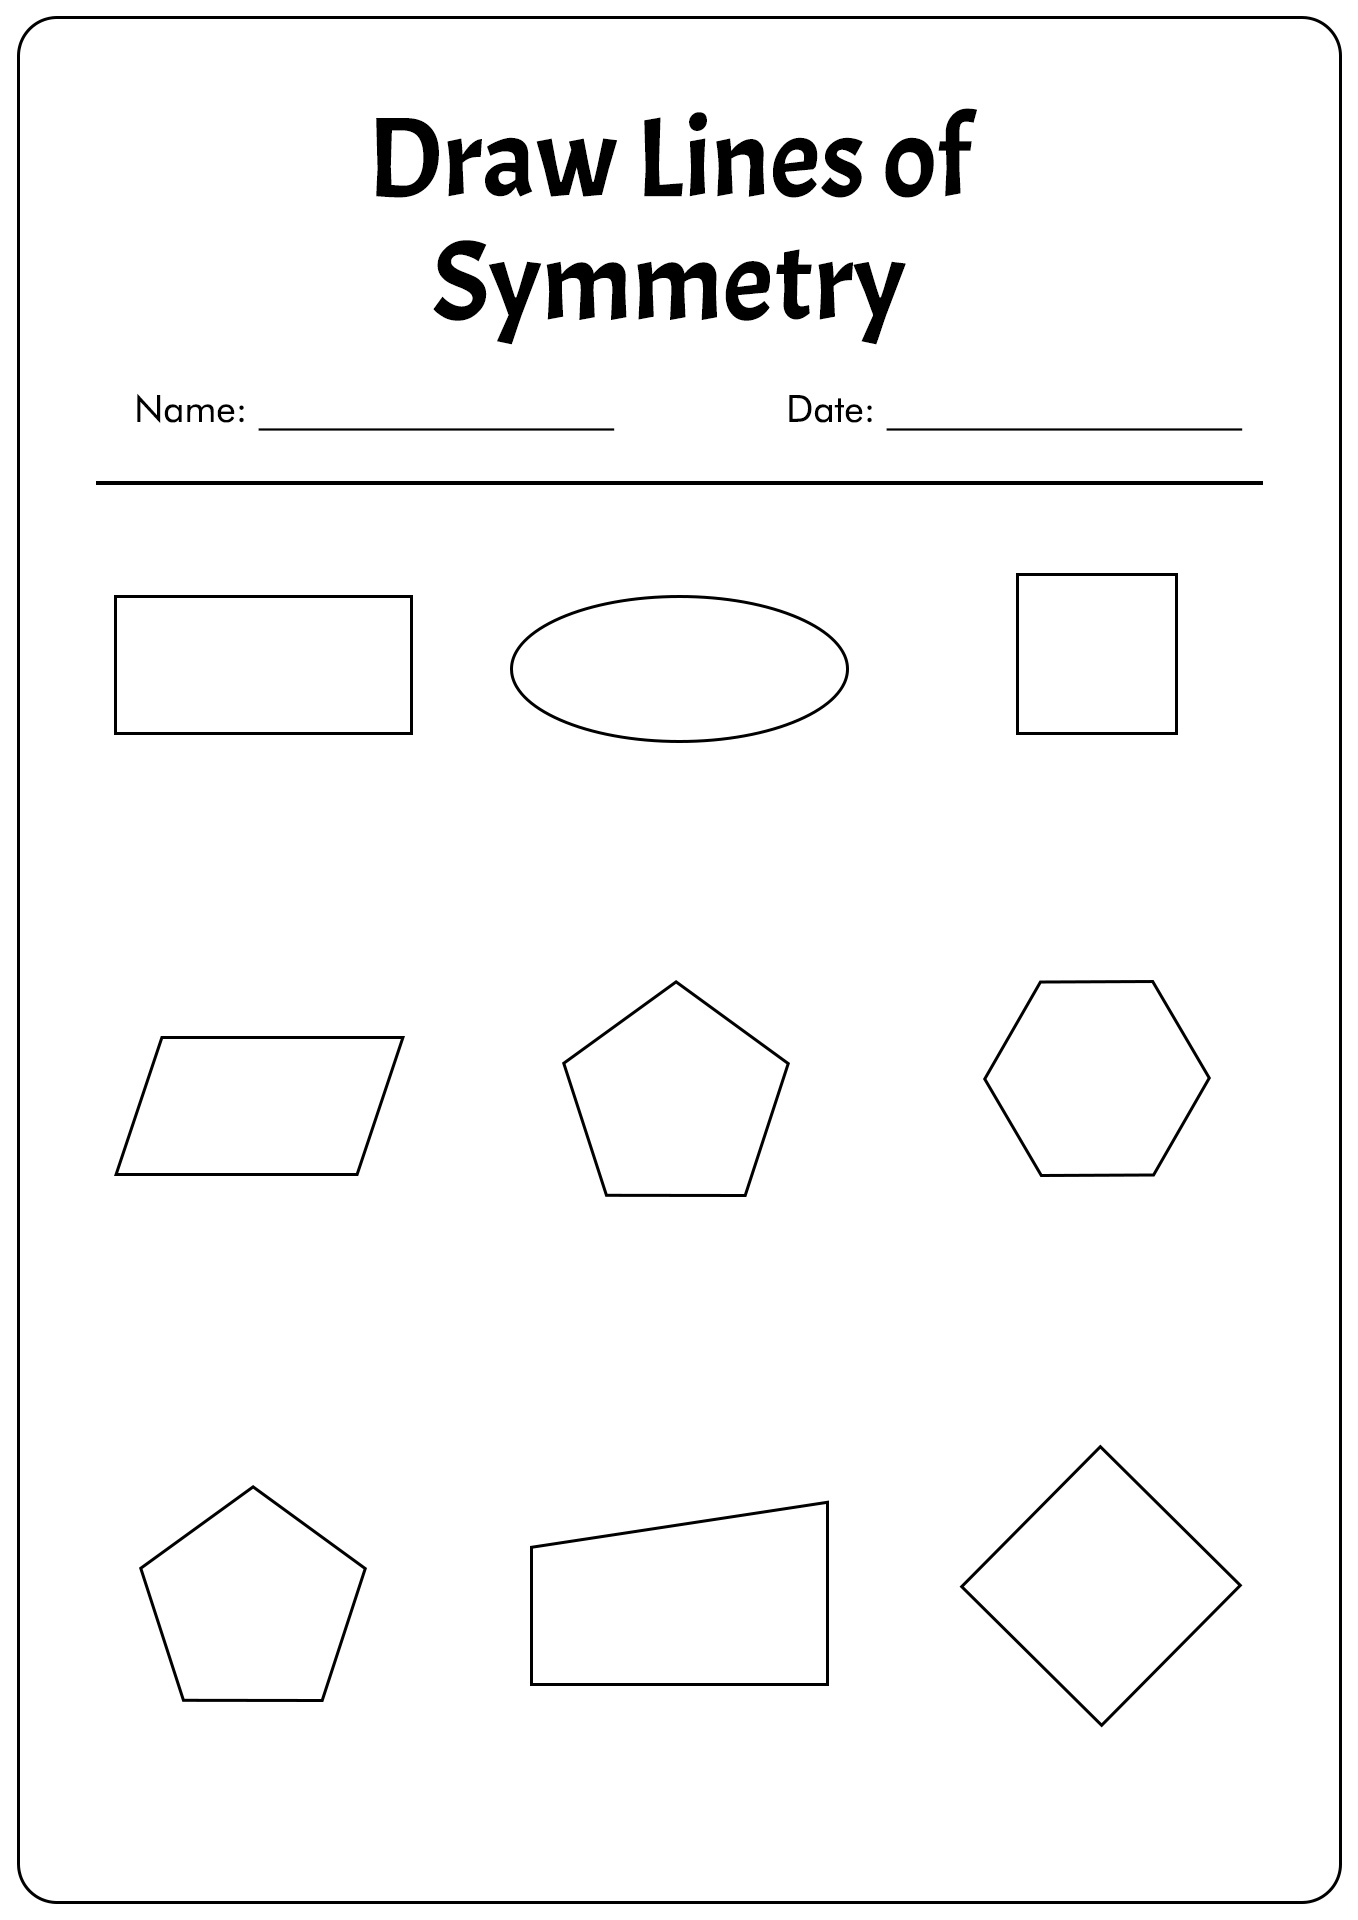 16 Best Images of Symmetry Art Worksheets - Symmetry Art Activity ...